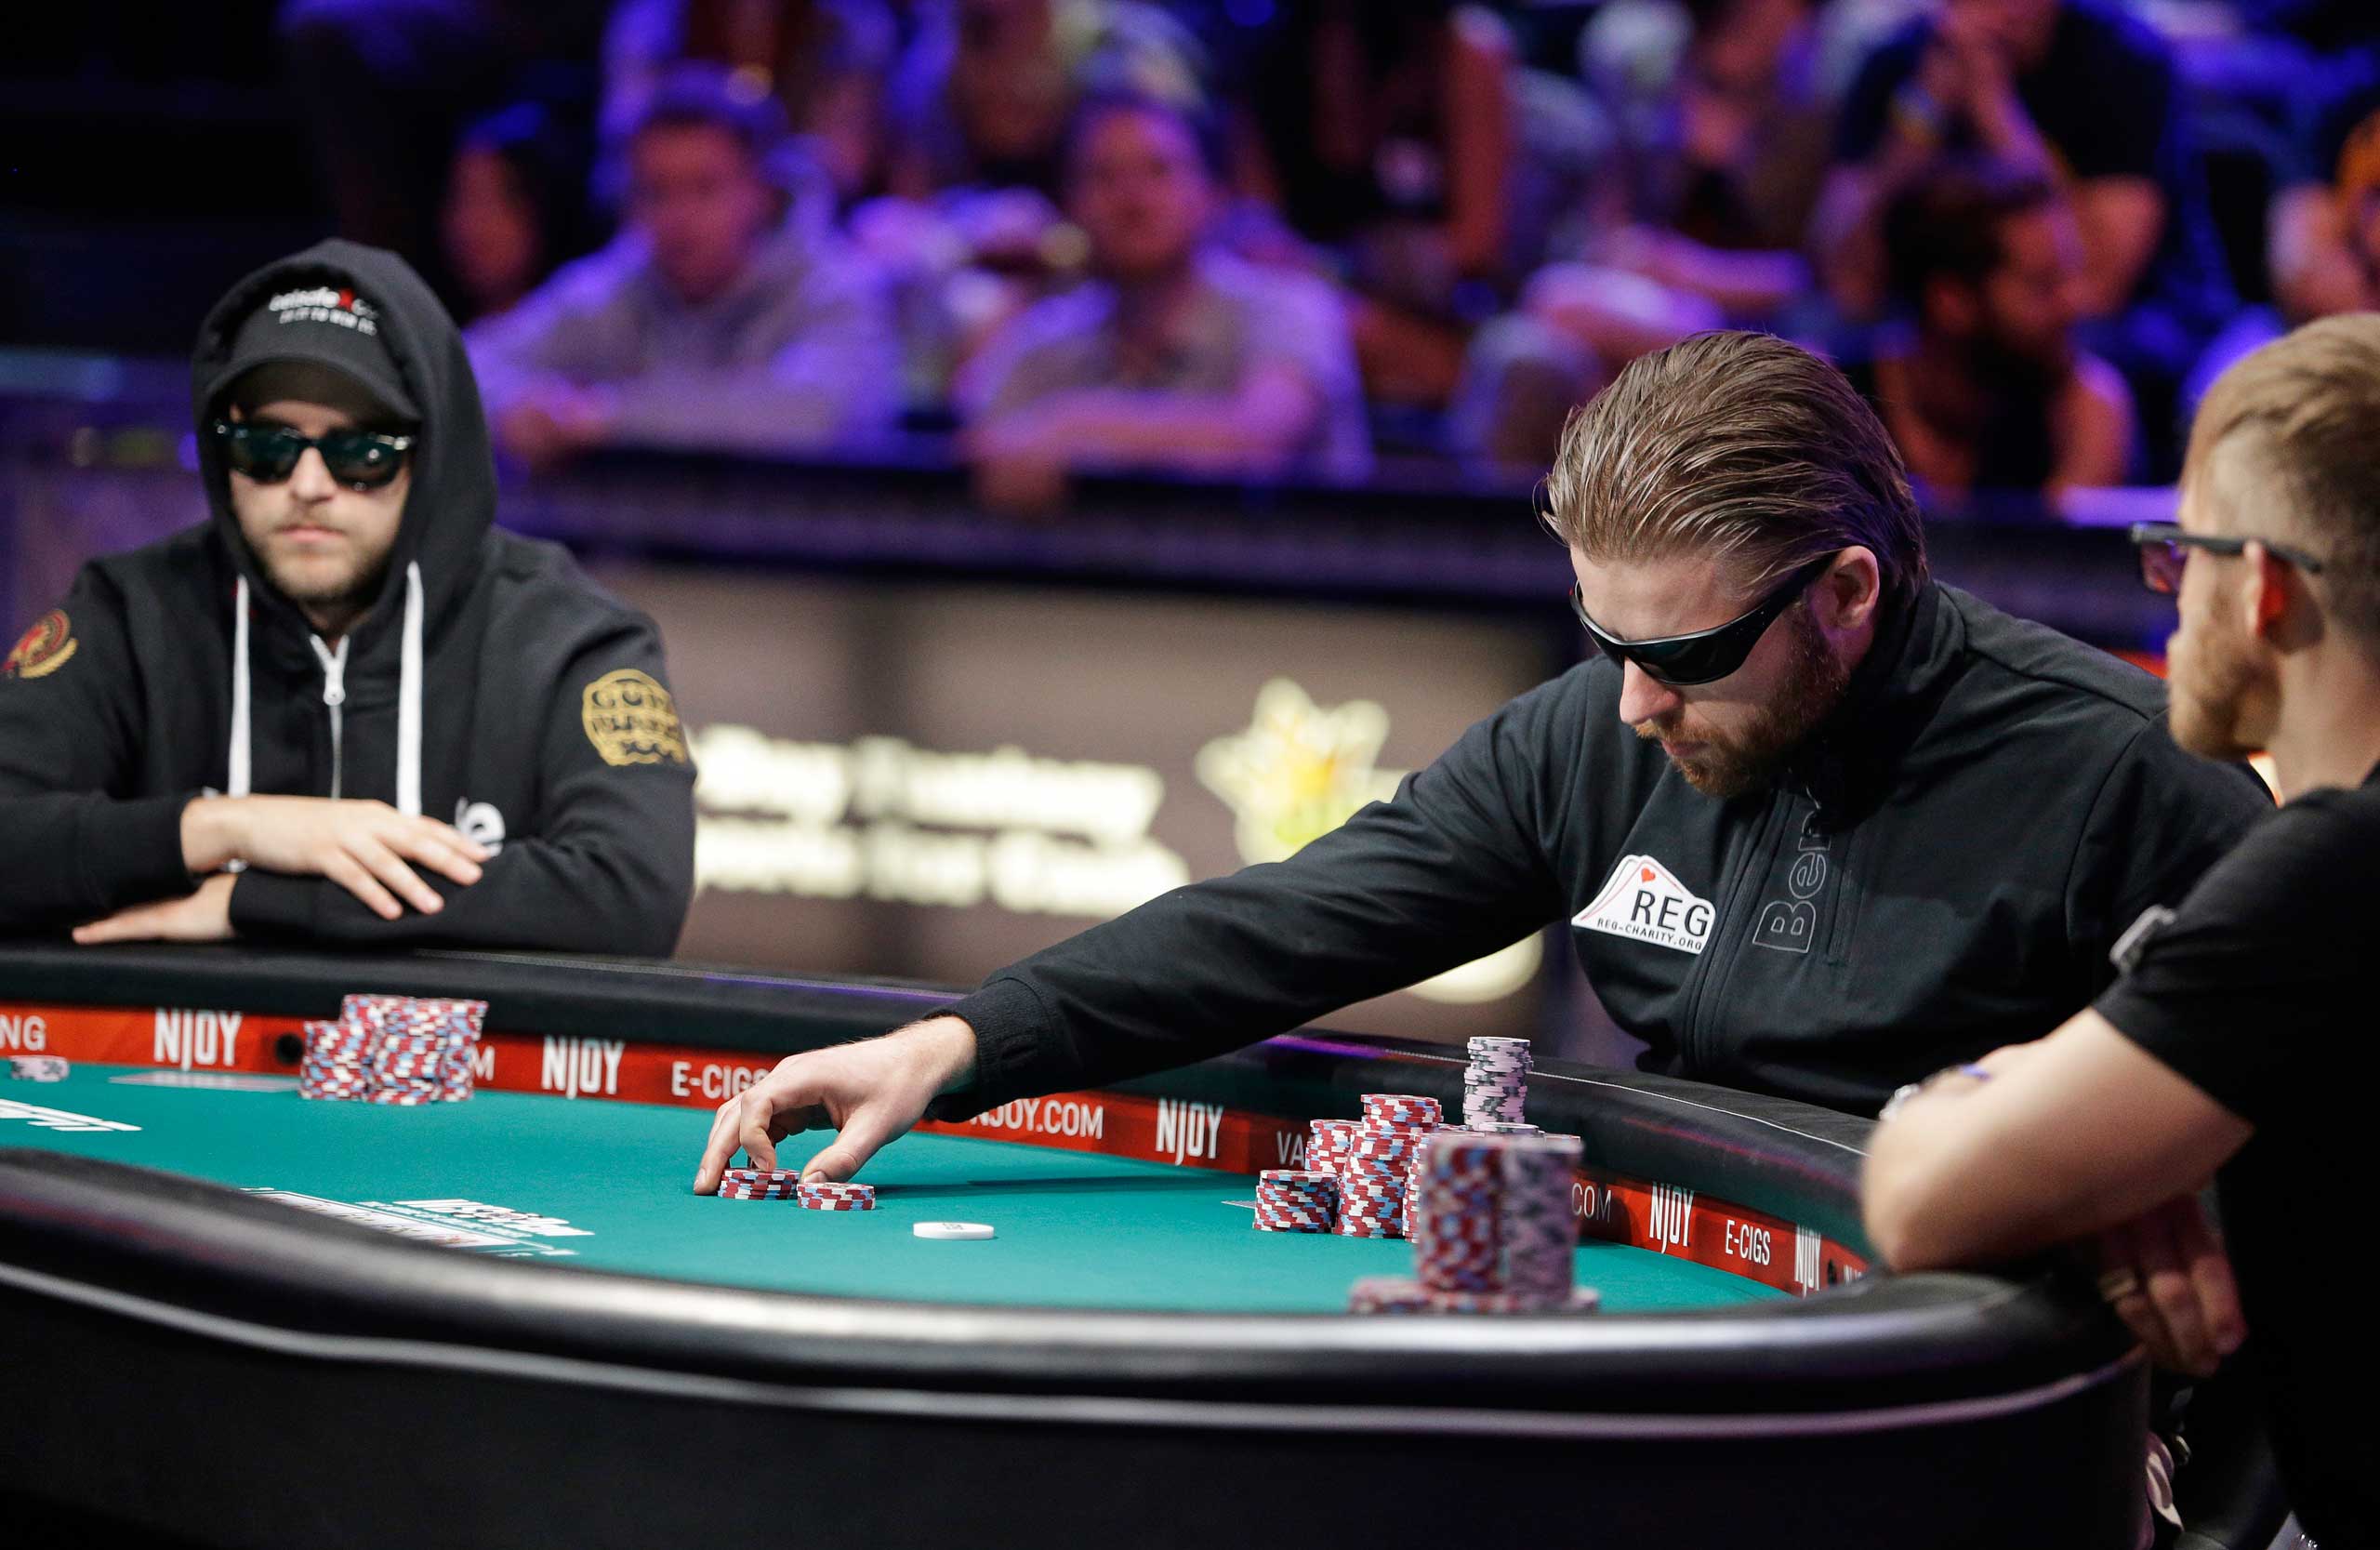 Jorryt van Hoof places a bet during the final night of the World Series of Poker final table in Las Vegas on Nov. 11, 2014. (John Locher—AP)